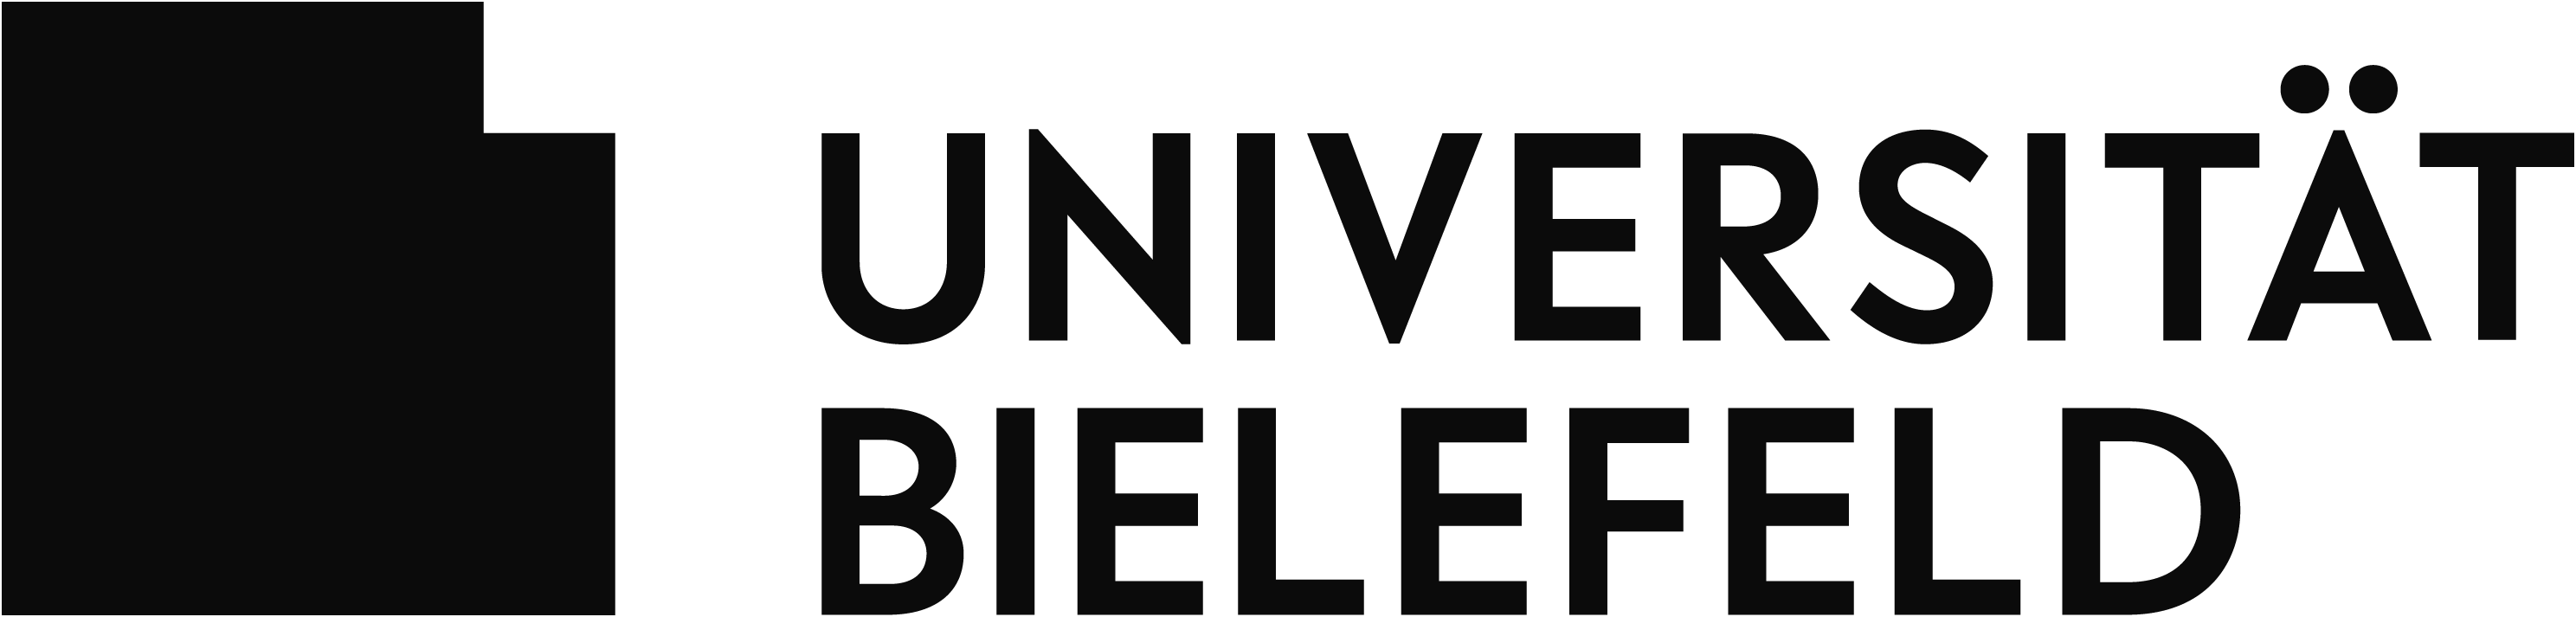 Logo of University of Bielefeld